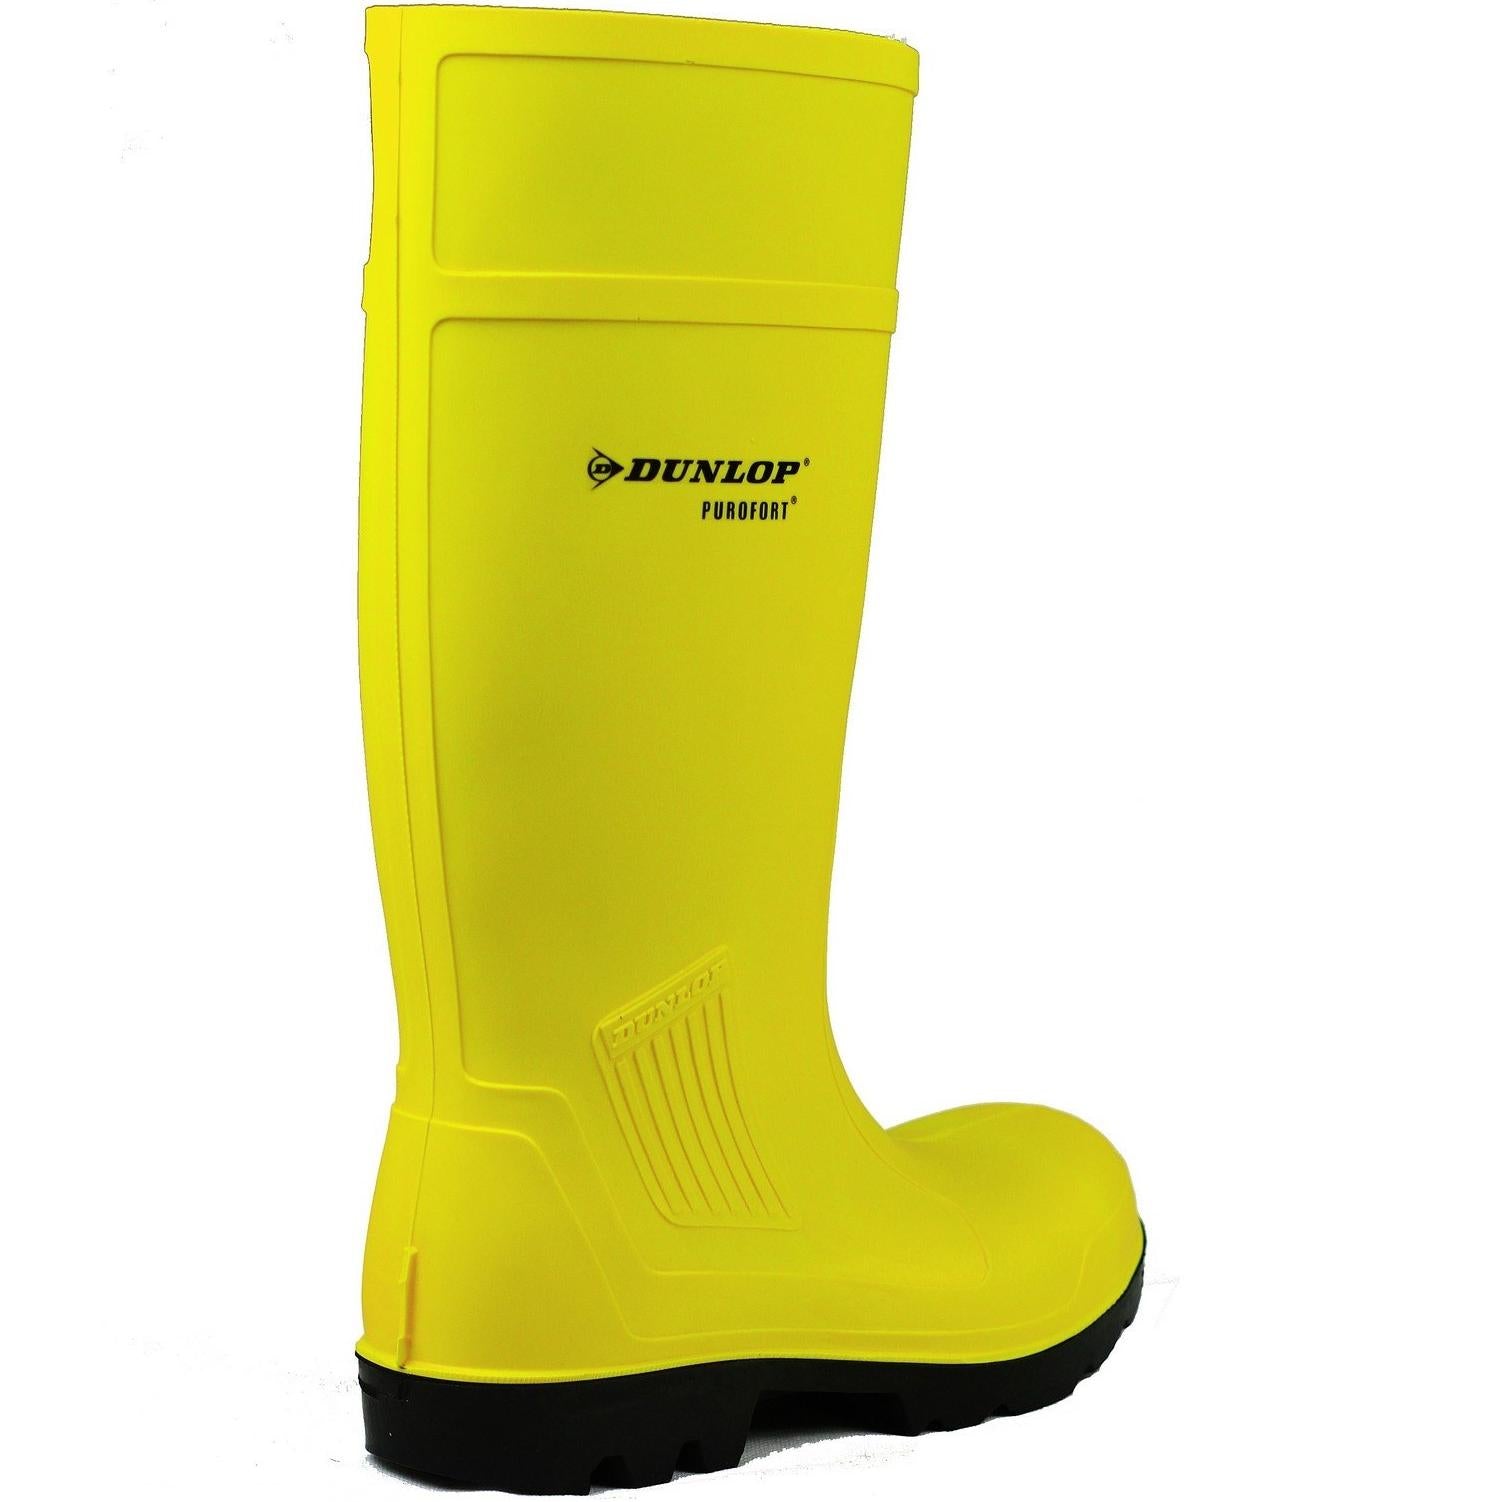 Dunlop Purofort Professional Full Safety Wellington Boots